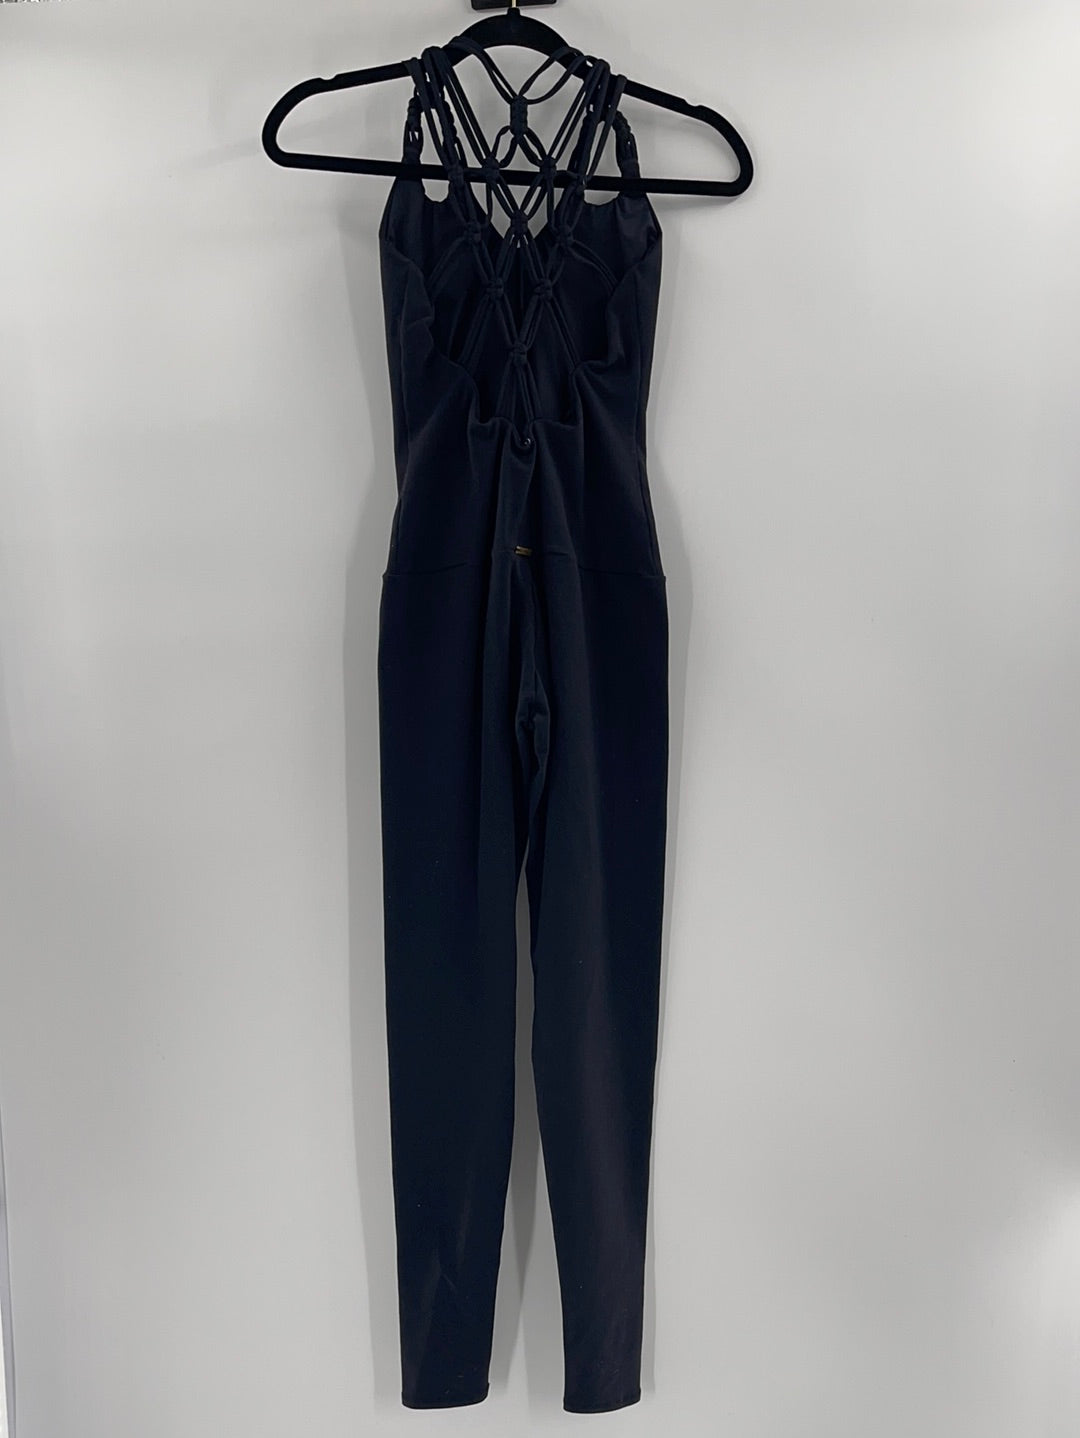 Mika Yogawear - Black Bodysuit Jumpsuit (Size Small)